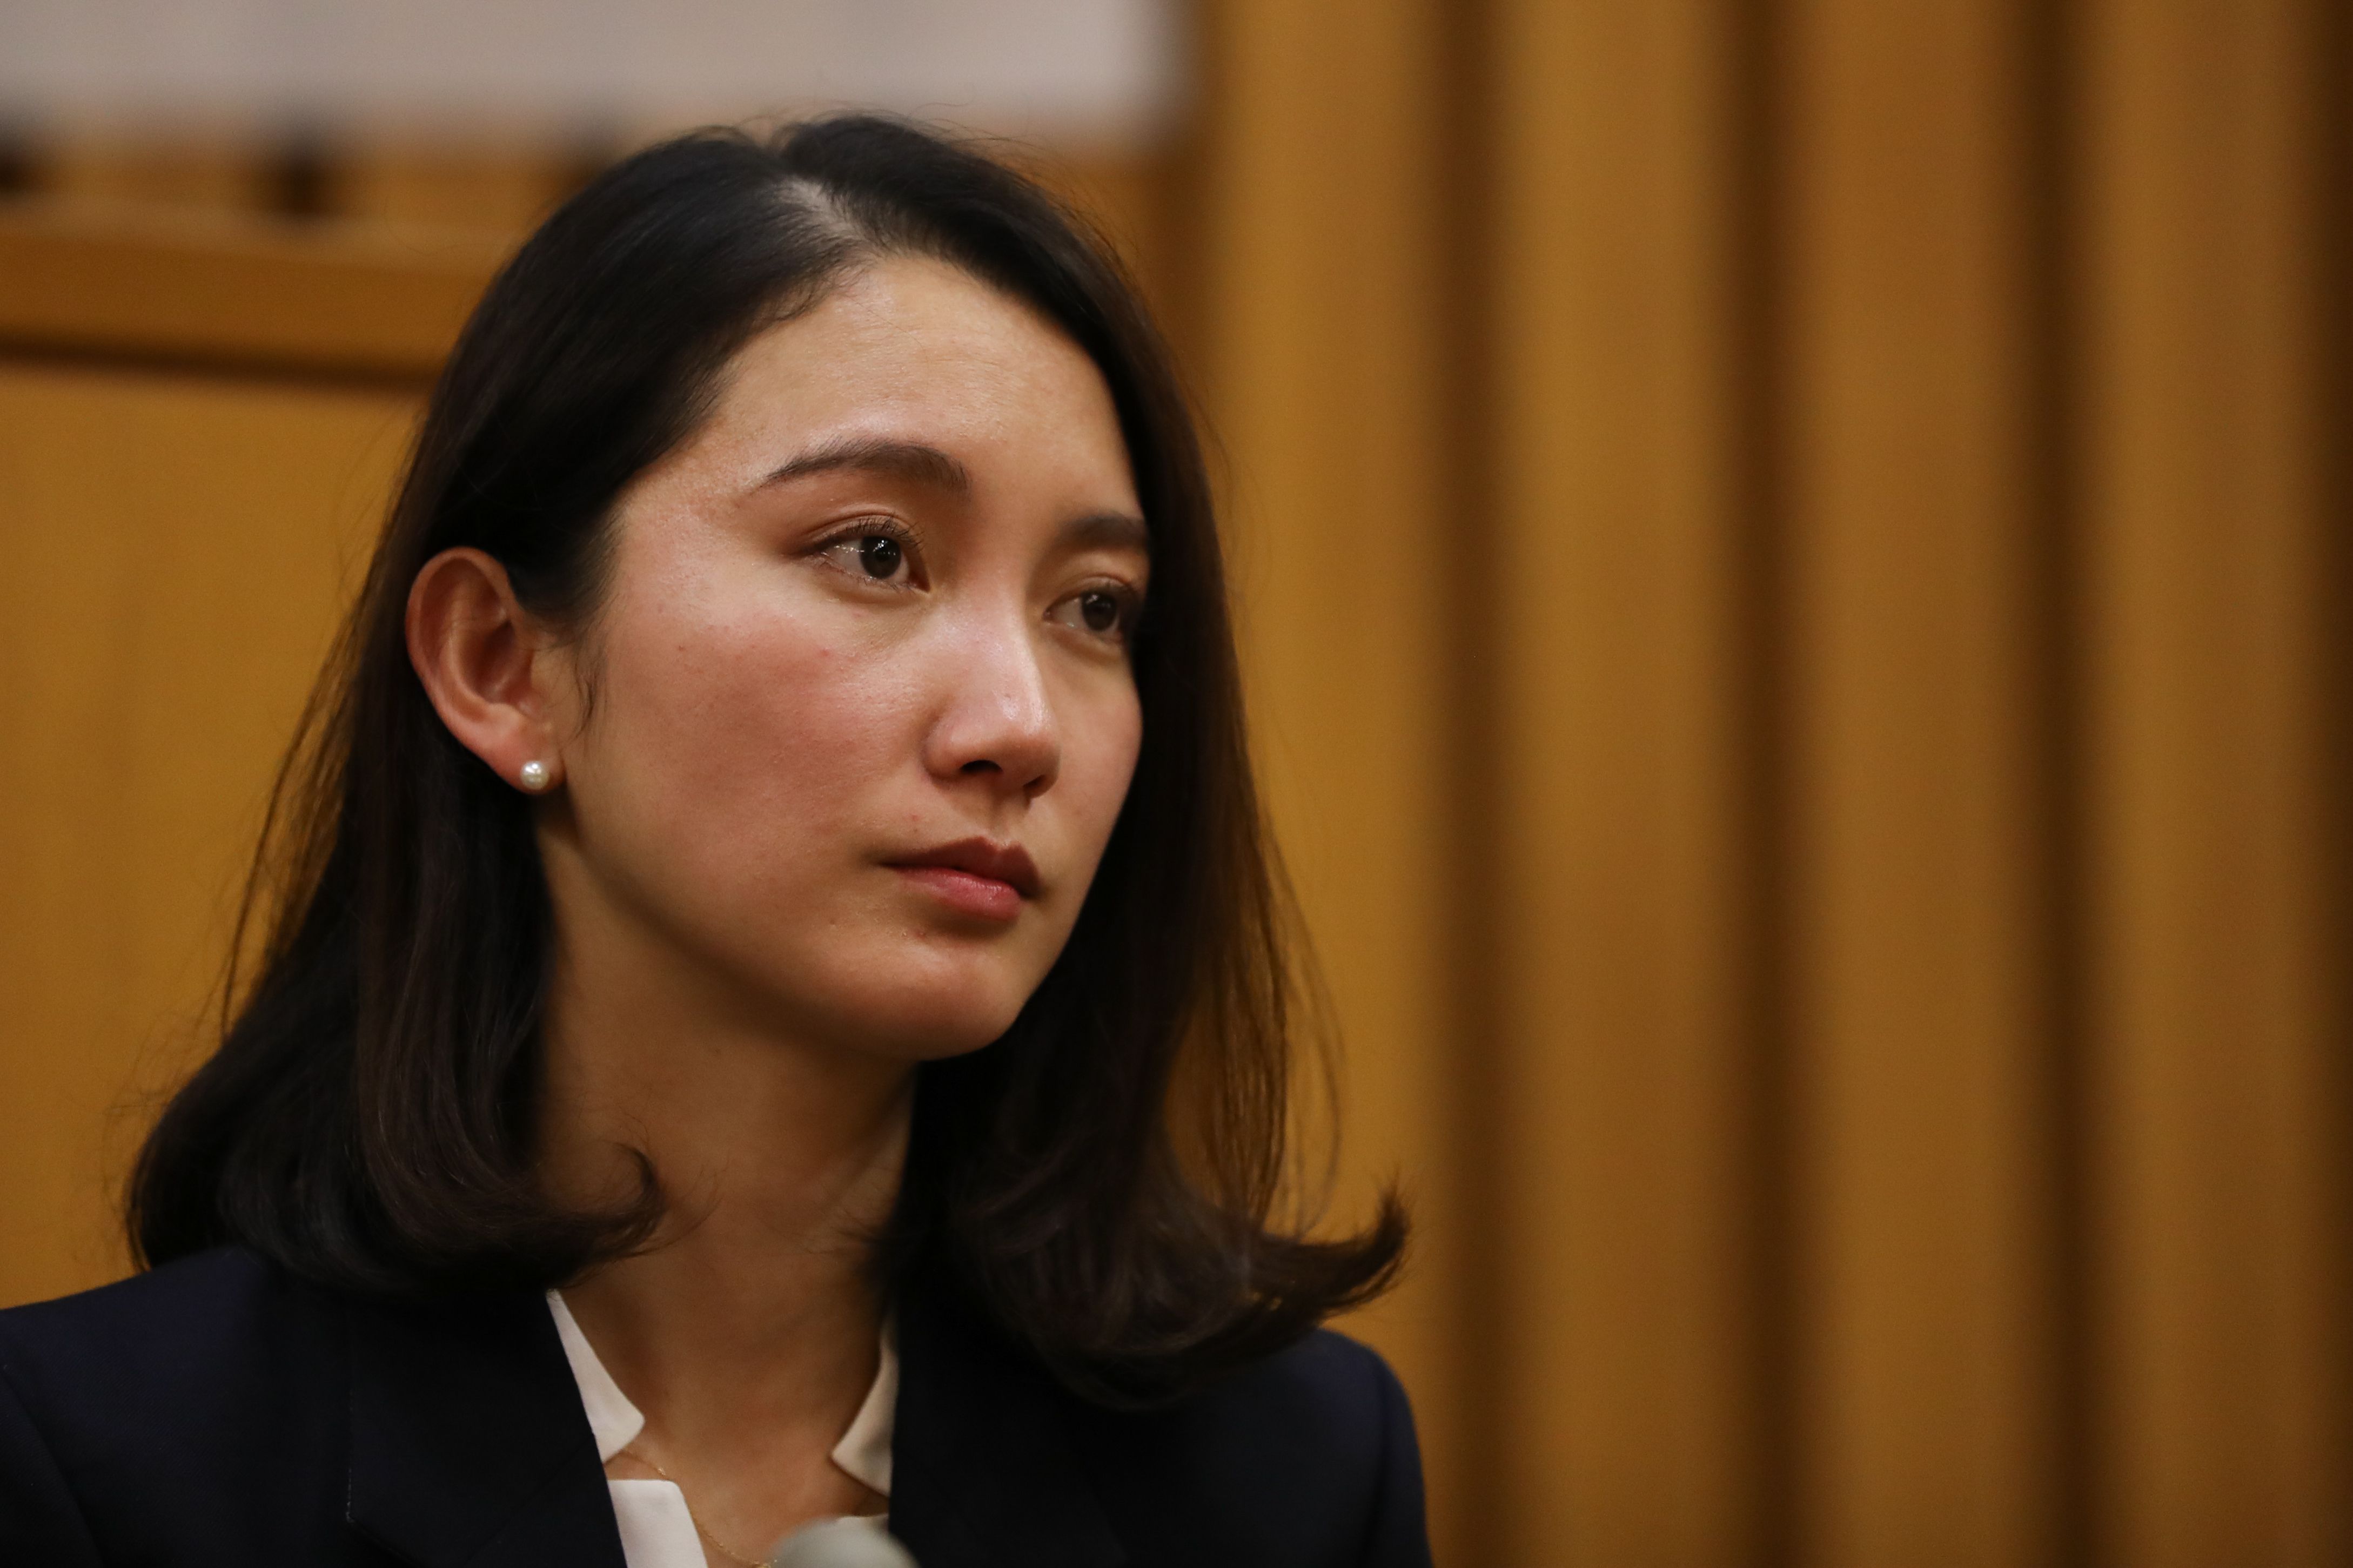 Jappnis Son Sex Blakmail Raj Wap Com Videos - Shiori Ito won civil case against her alleged rapist. But Japan's rape laws  need overhaul, campaigners say | CNN